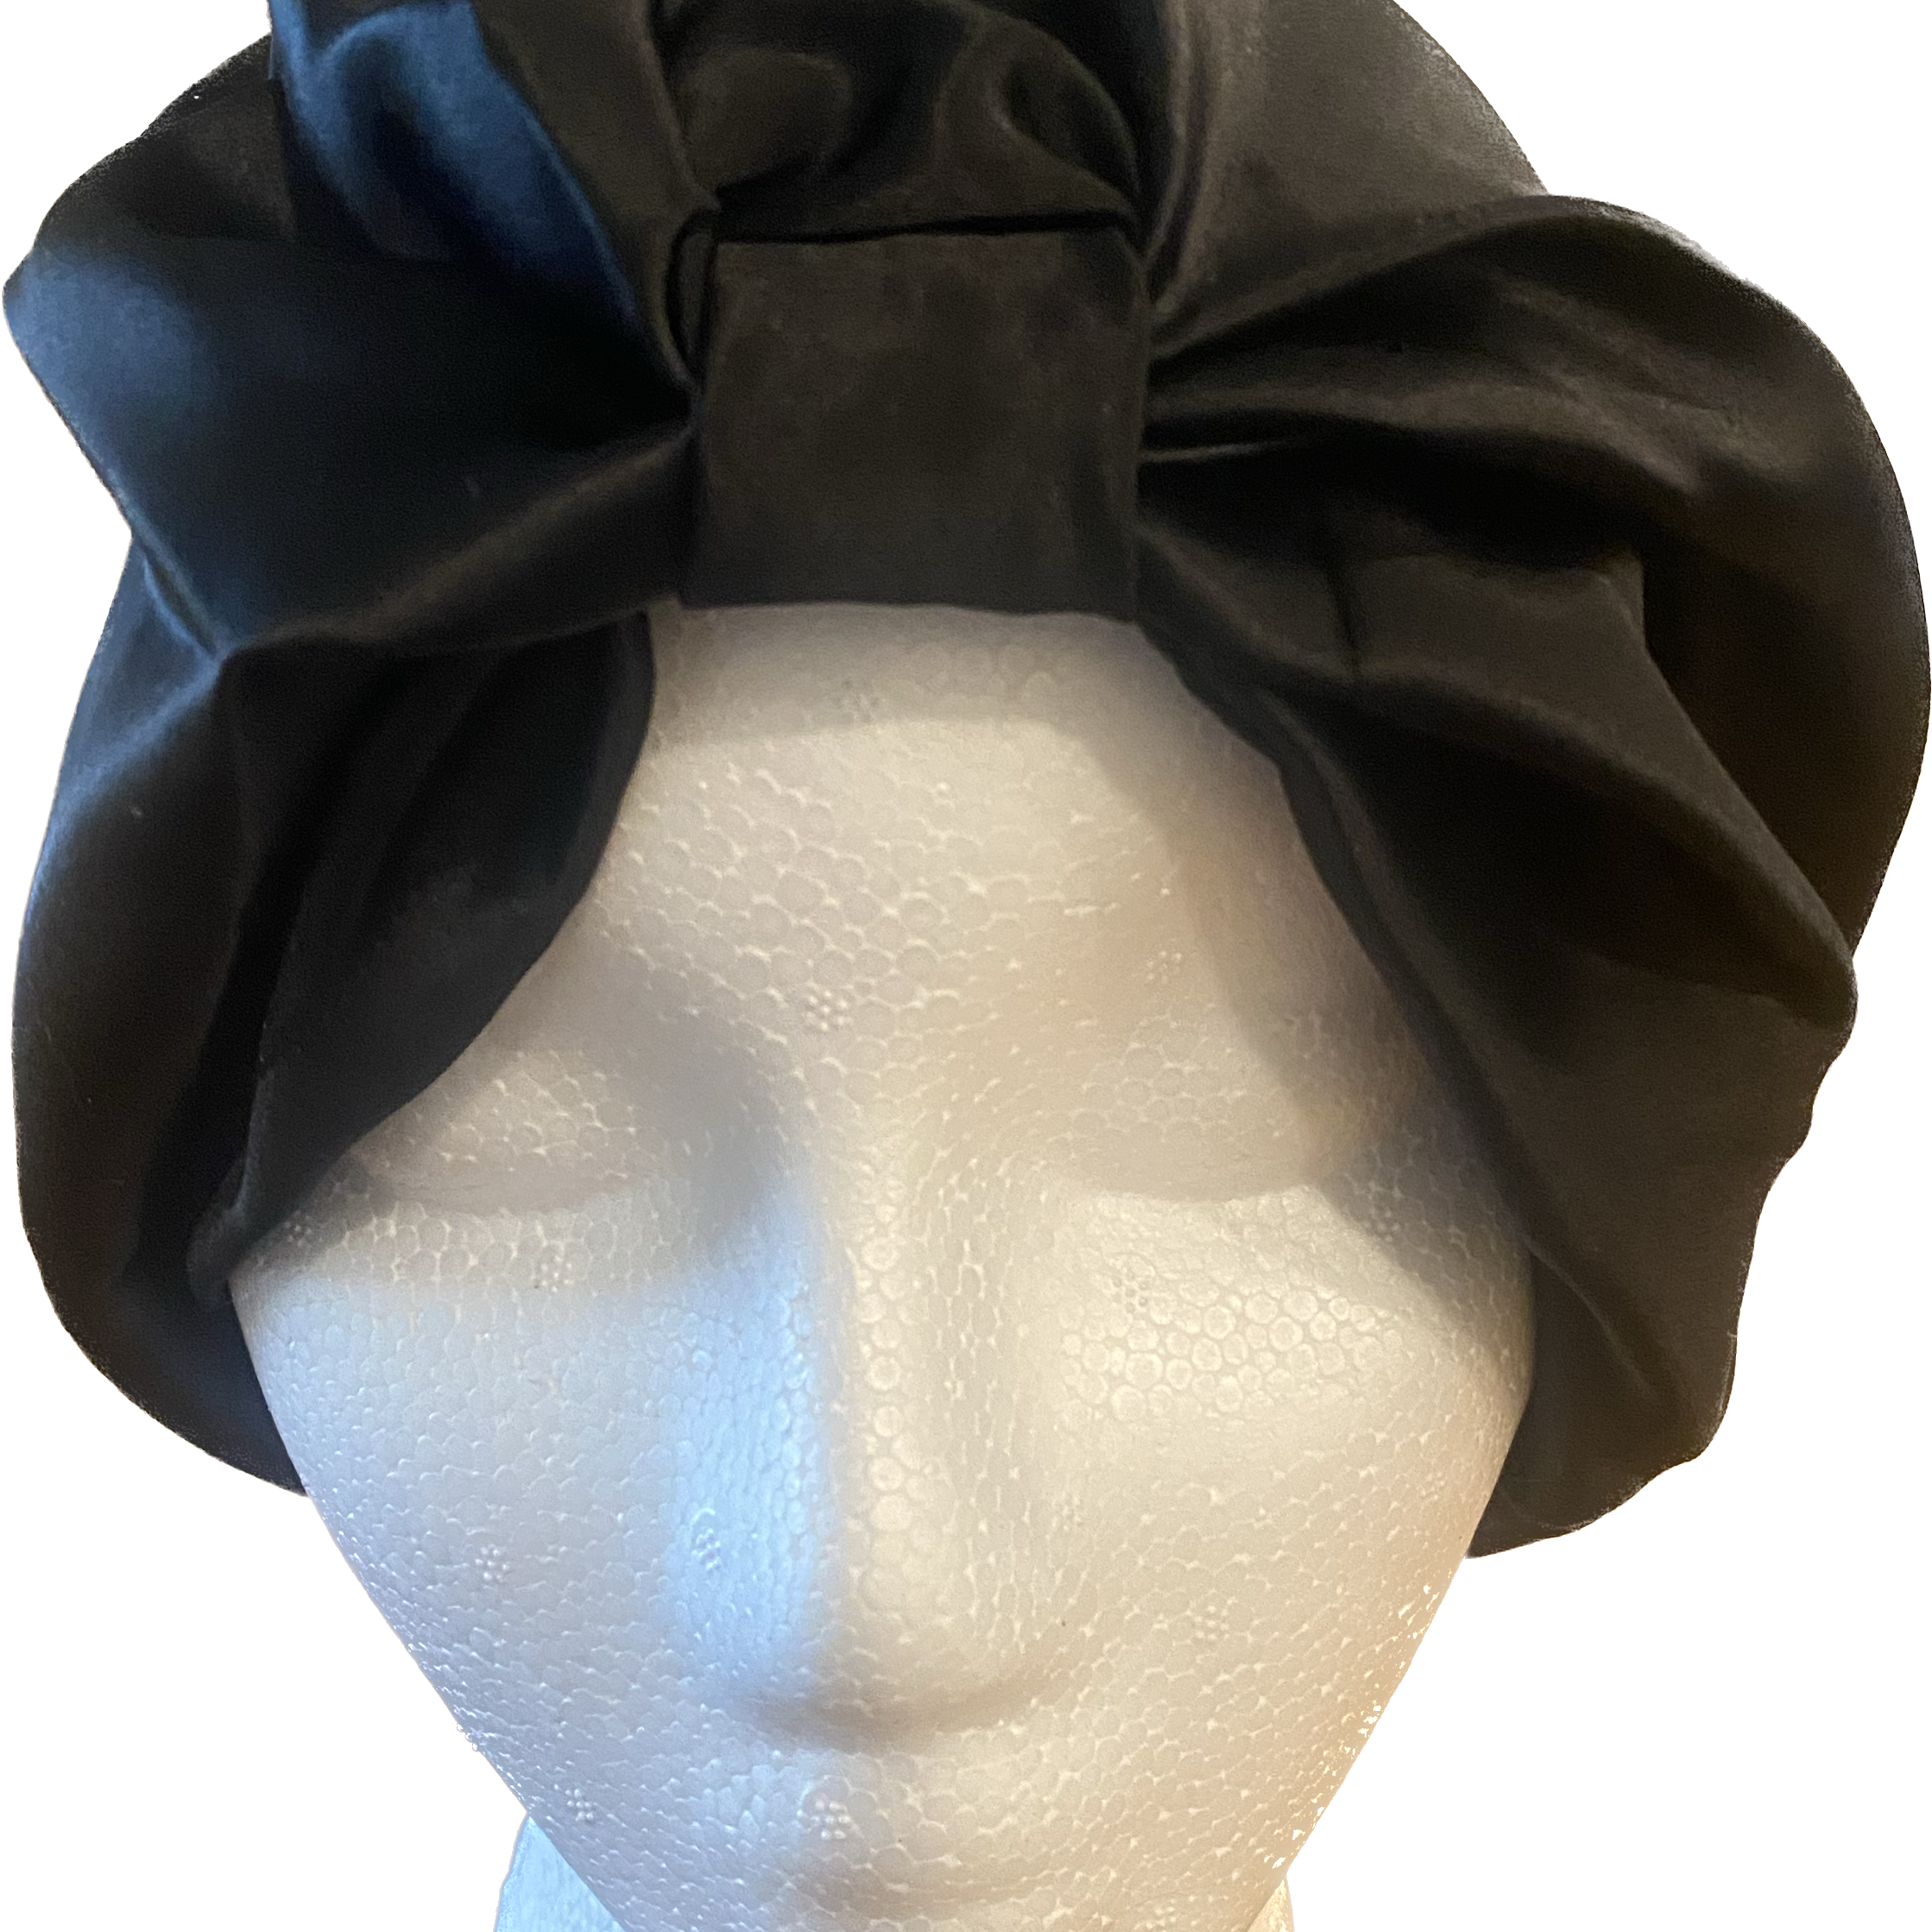  Black Square Silk Night Cap/Bonnet - Black Square Silk Night Cap/Bonnet -  -  - fine silk products by Forsters Finery